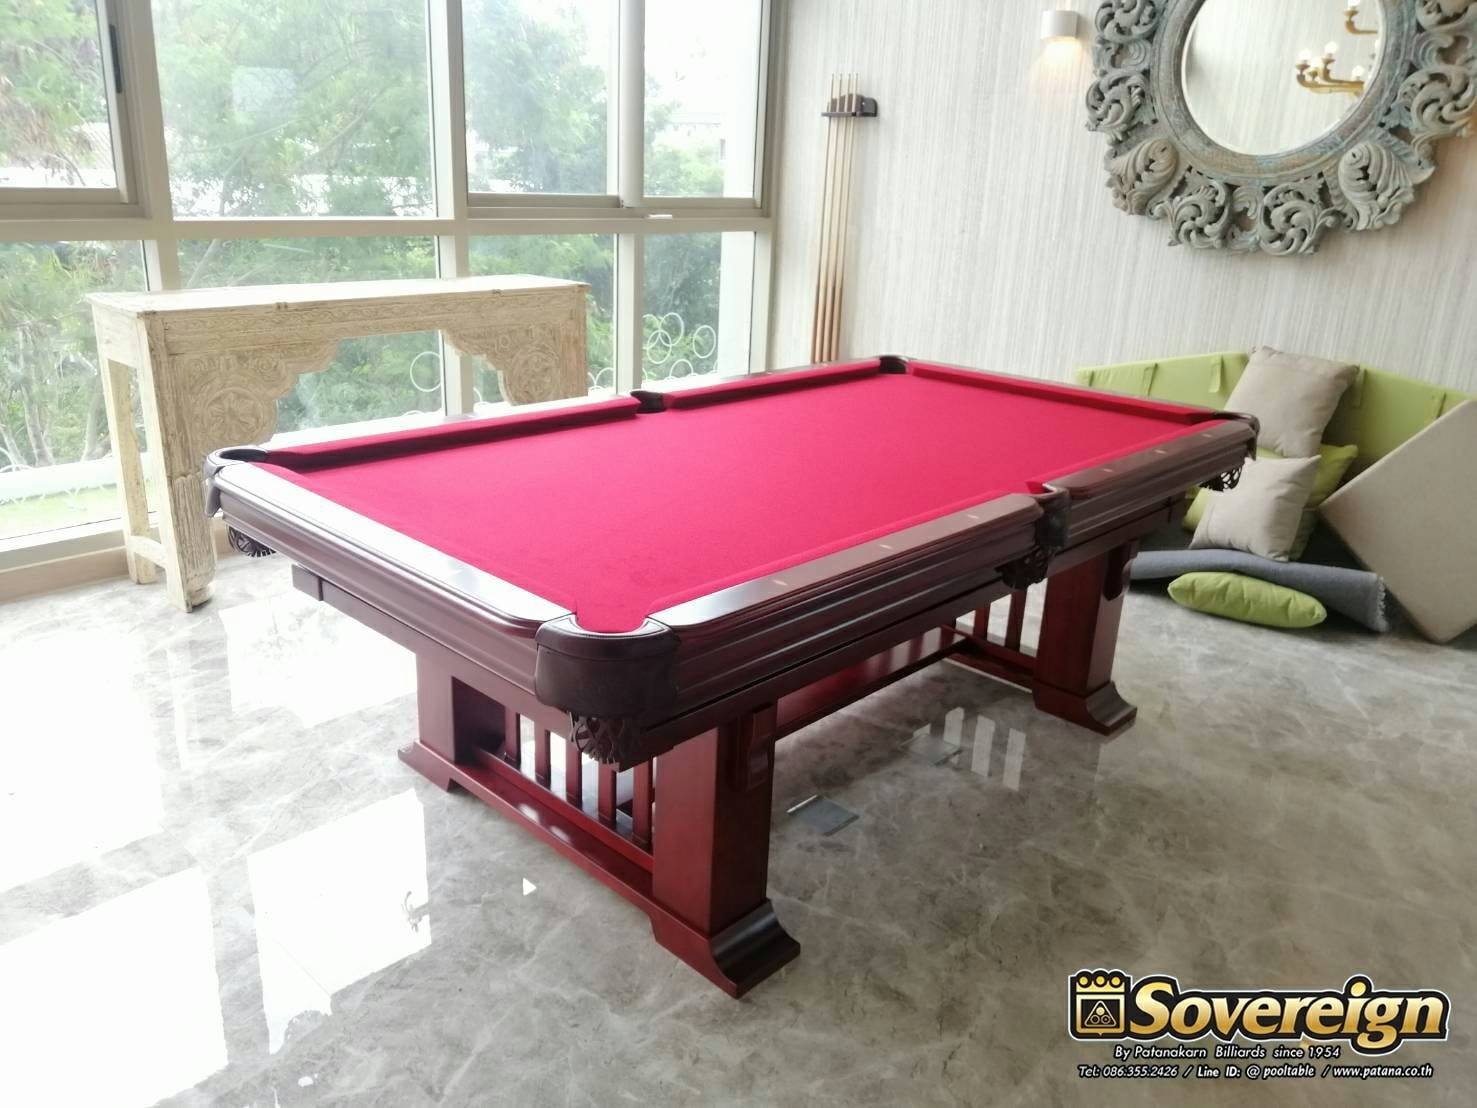 Patanakarn Billiards ( Sovereign ) โต๊ะพูลหยอดเหรียญคุณภาพ